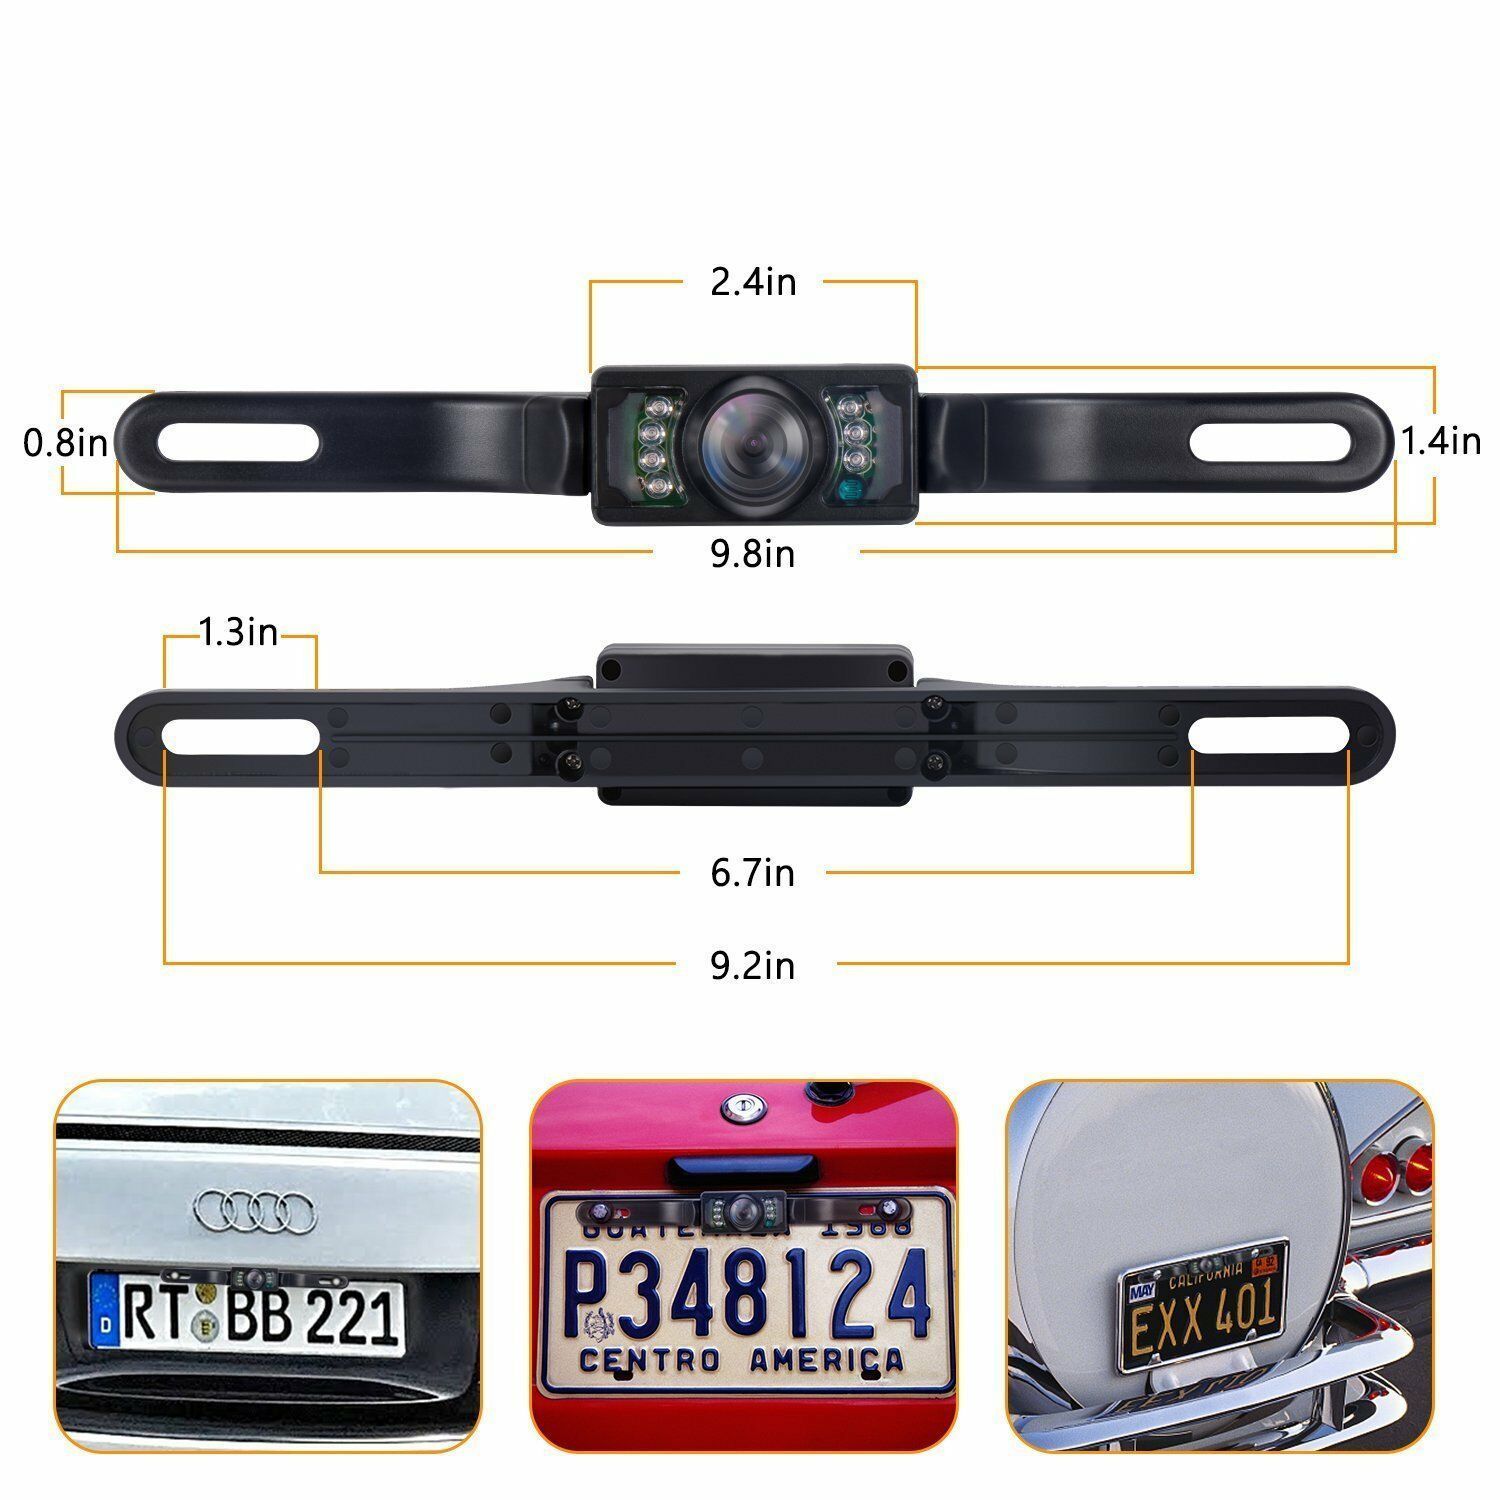 Car-Rear-View-5-Inch-LCD-Monitor-Mirror-Wireless-Backup-Camera-Parking-Reverse-Kit-1543515